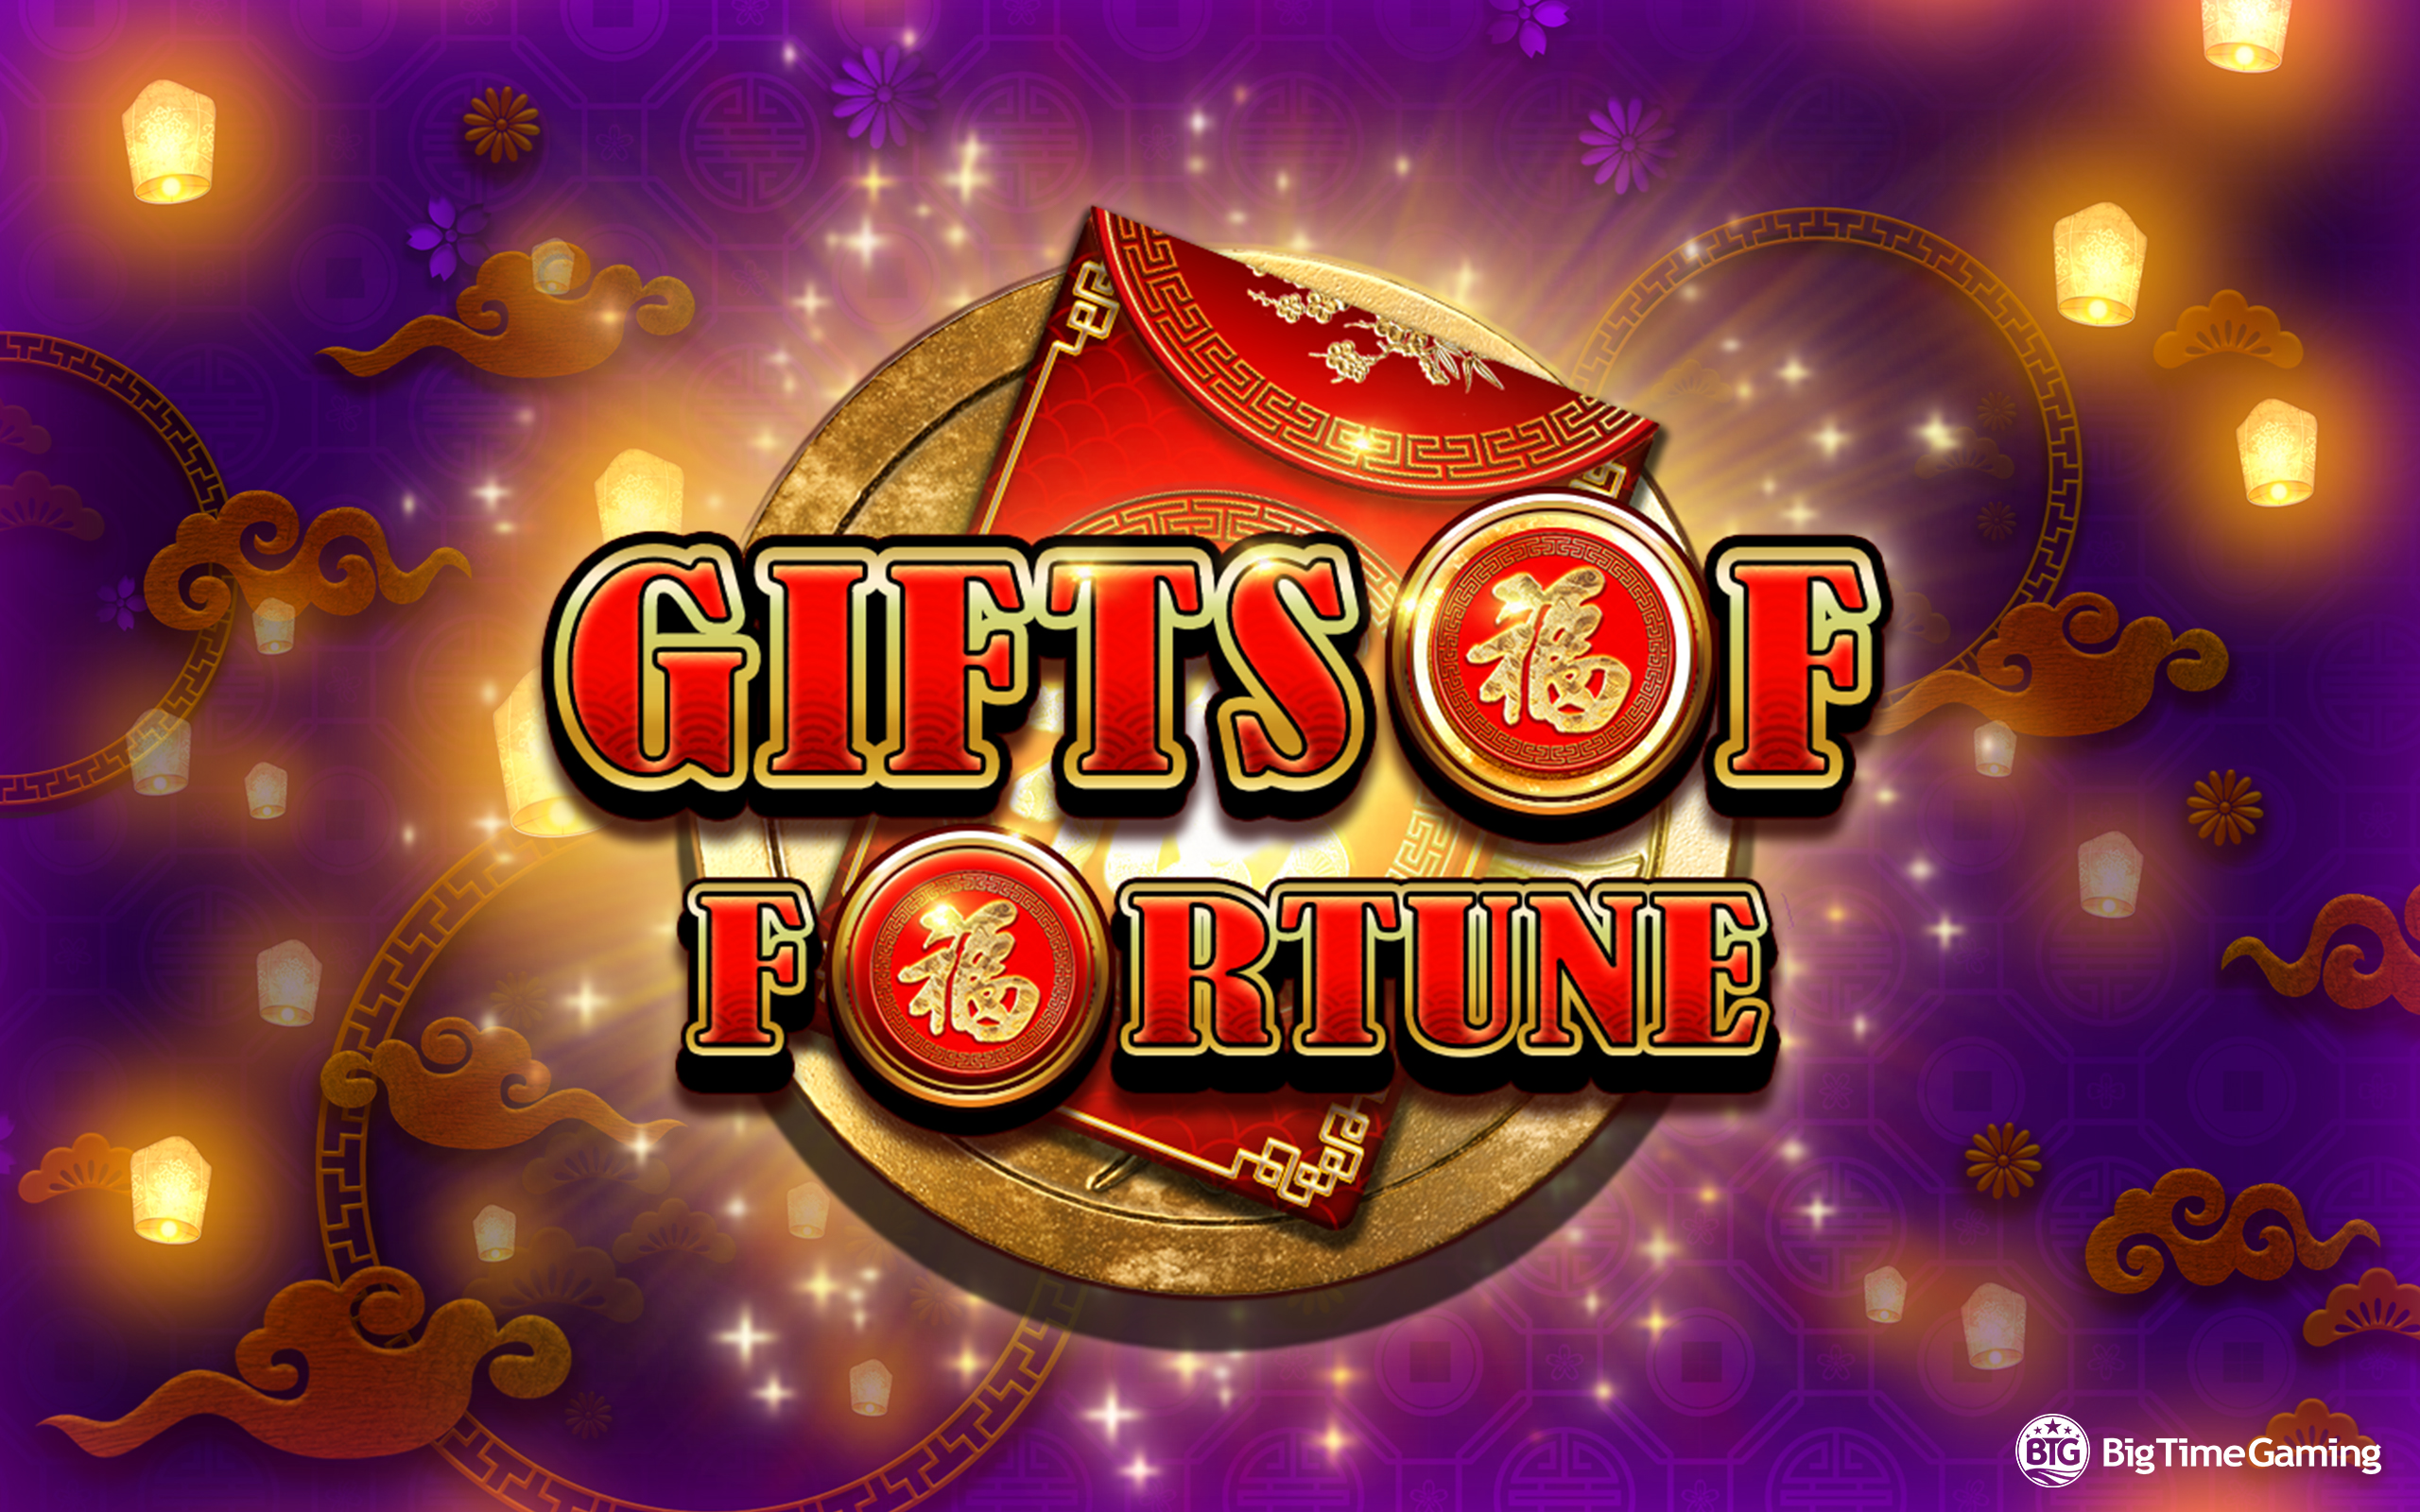 gifts_of_fortune_desktop_wallpaper_2560x1600.jpg thumbnail